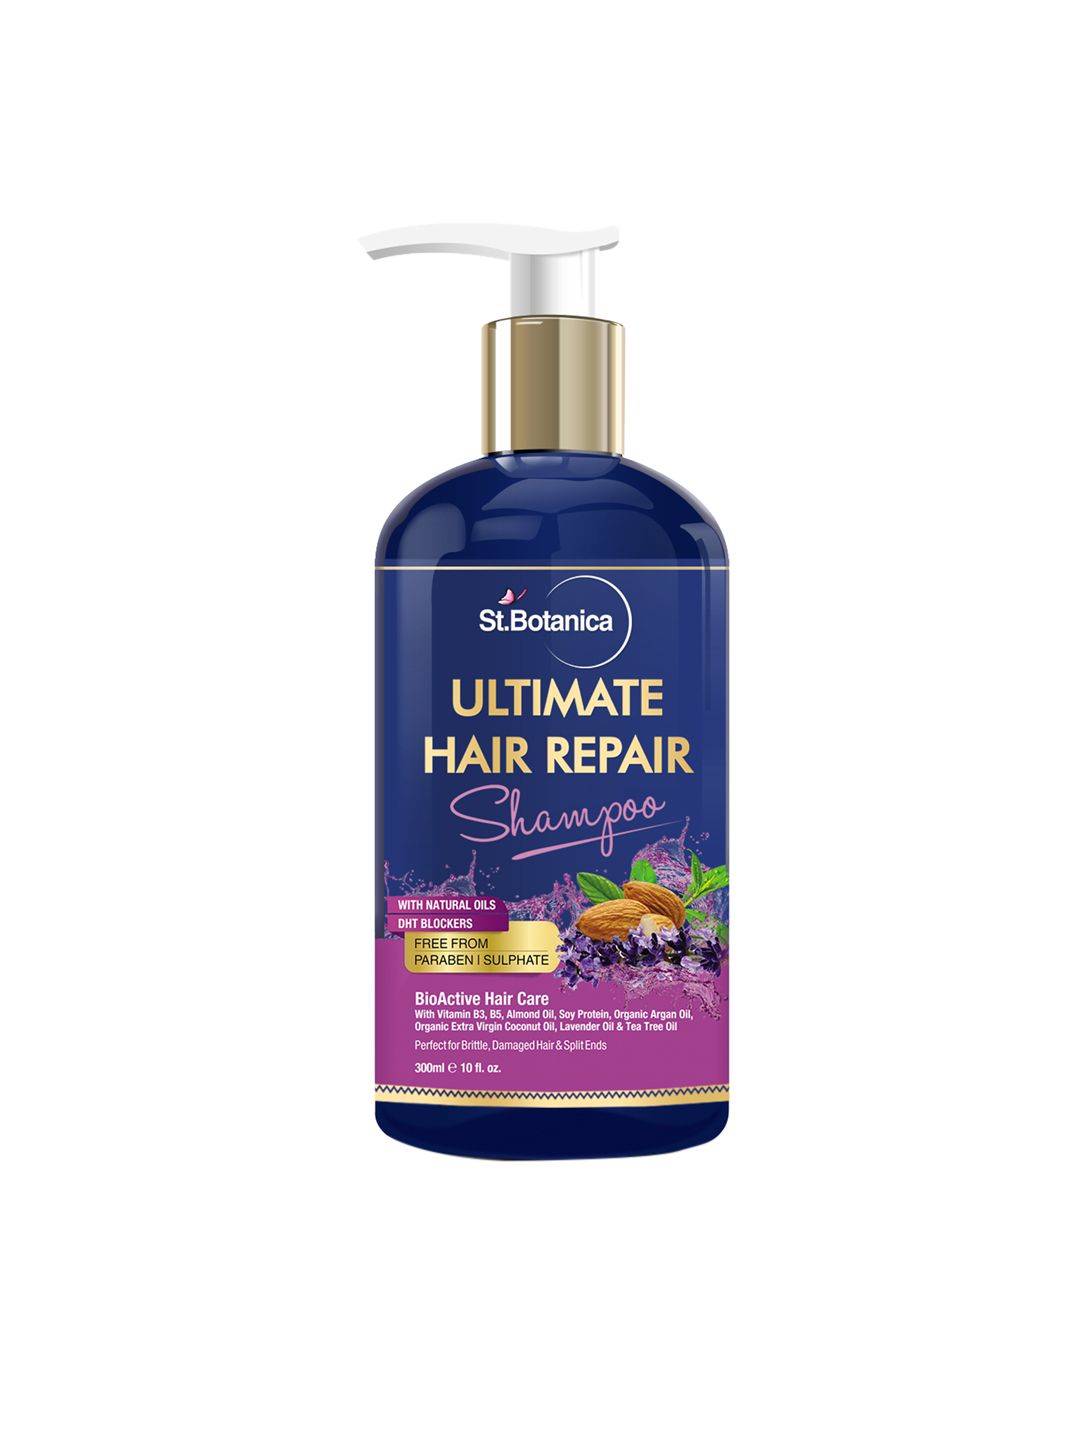 St.Botanica Ultimate Hair Repair Shampoo, 300ml Price in India